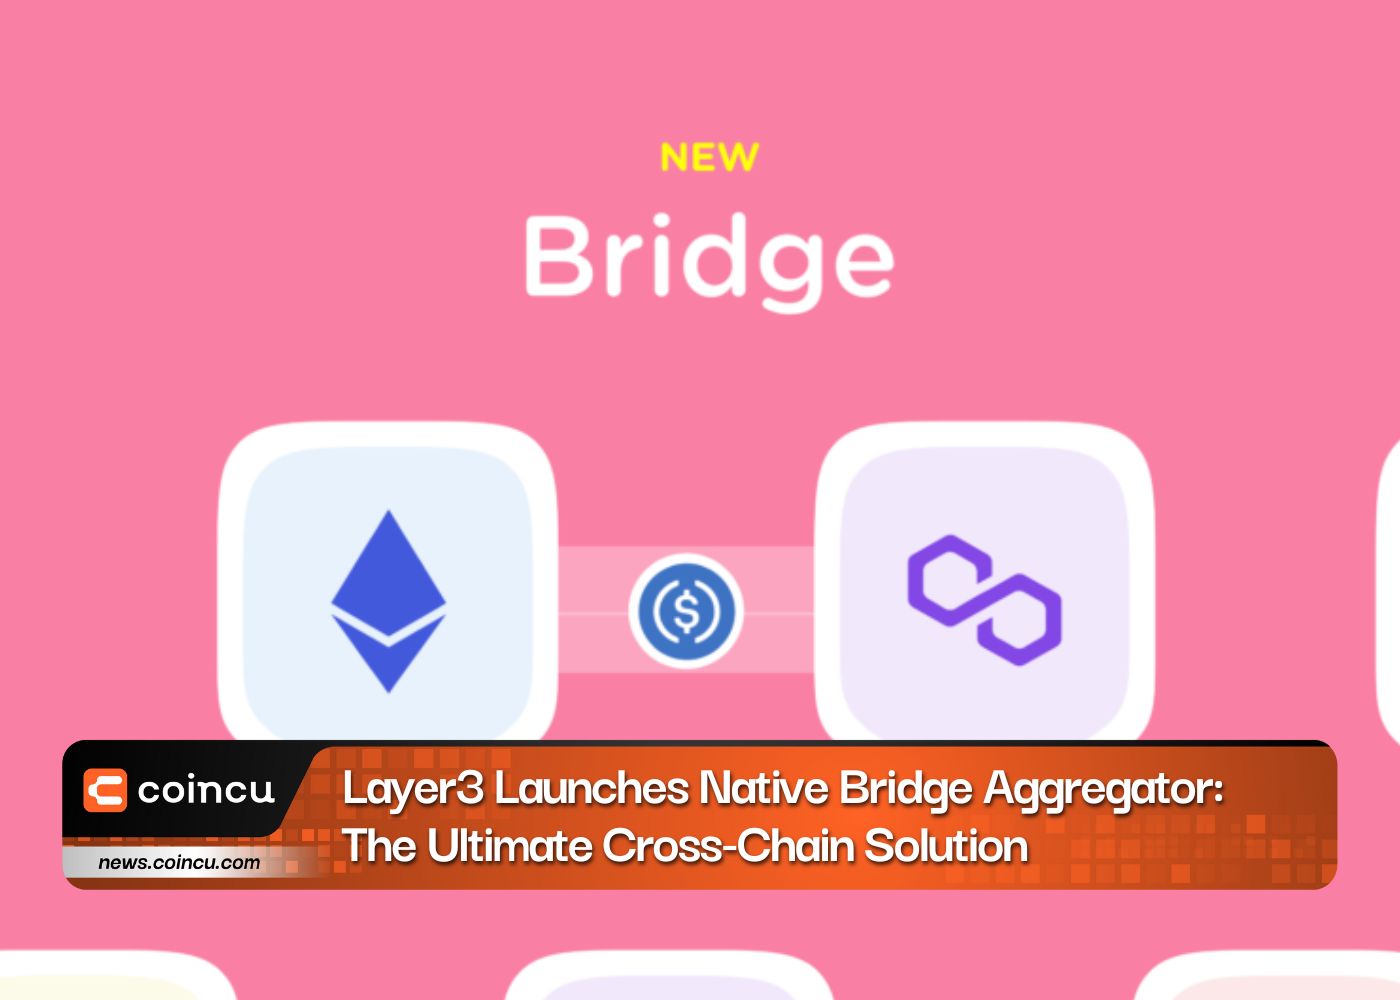 Layer3 Launches Native Bridge Aggregator: The Ultimate Cross-Chain Solution